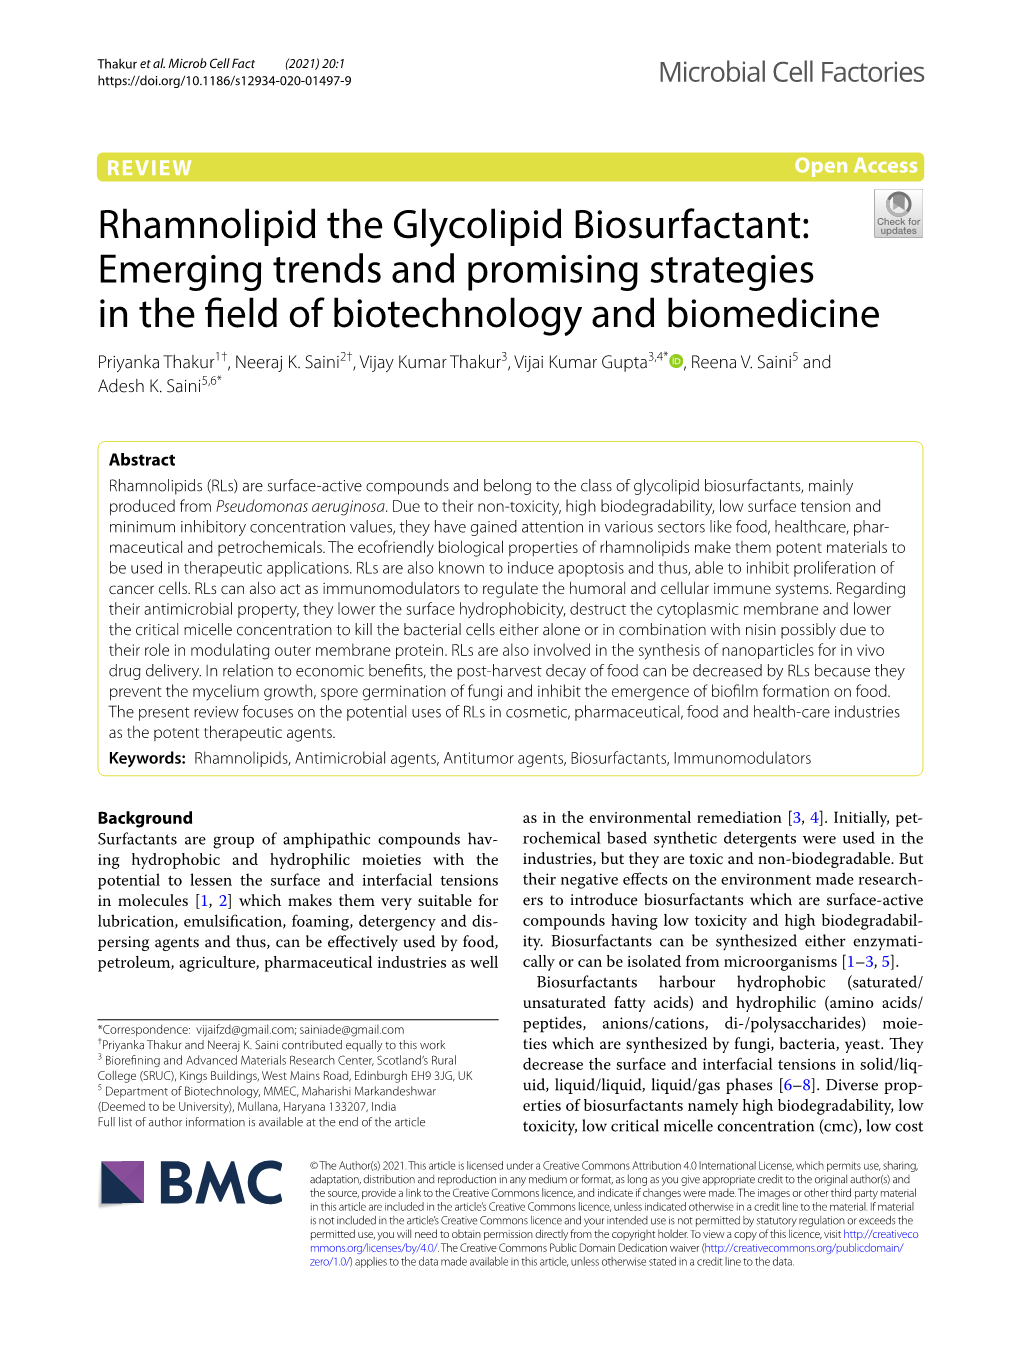 Rhamnolipid the Glycolipid Biosurfactant: Emerging Trends and Promising Strategies in the Feld of Biotechnology and Biomedicine Priyanka Thakur1†, Neeraj K